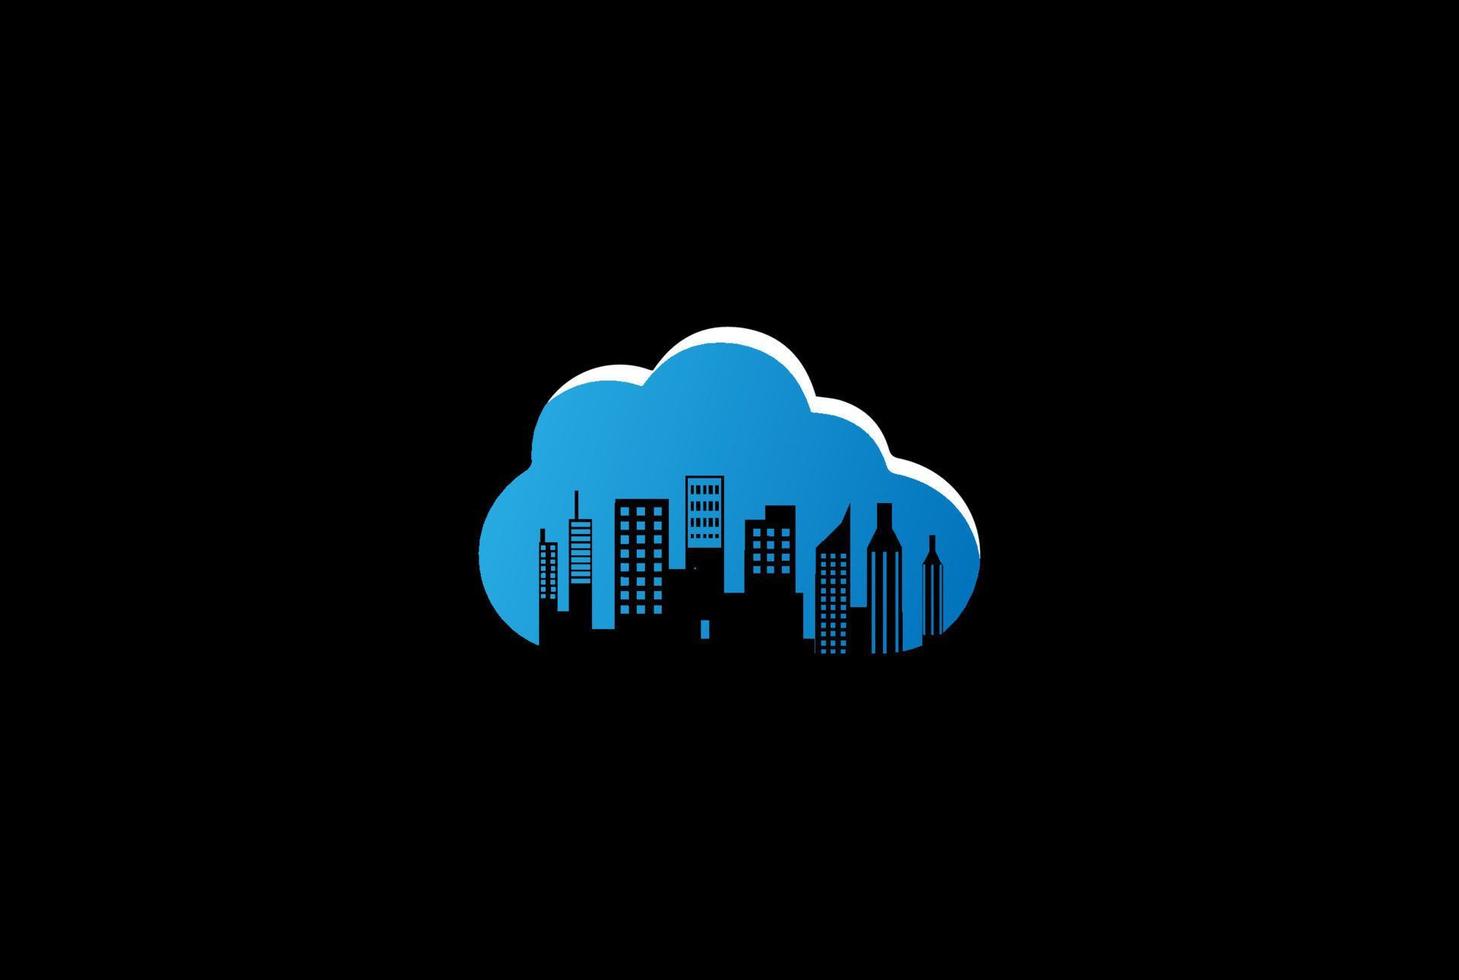 vetor moderno do logotipo da tecnologia da nuvem da cidade da cidade